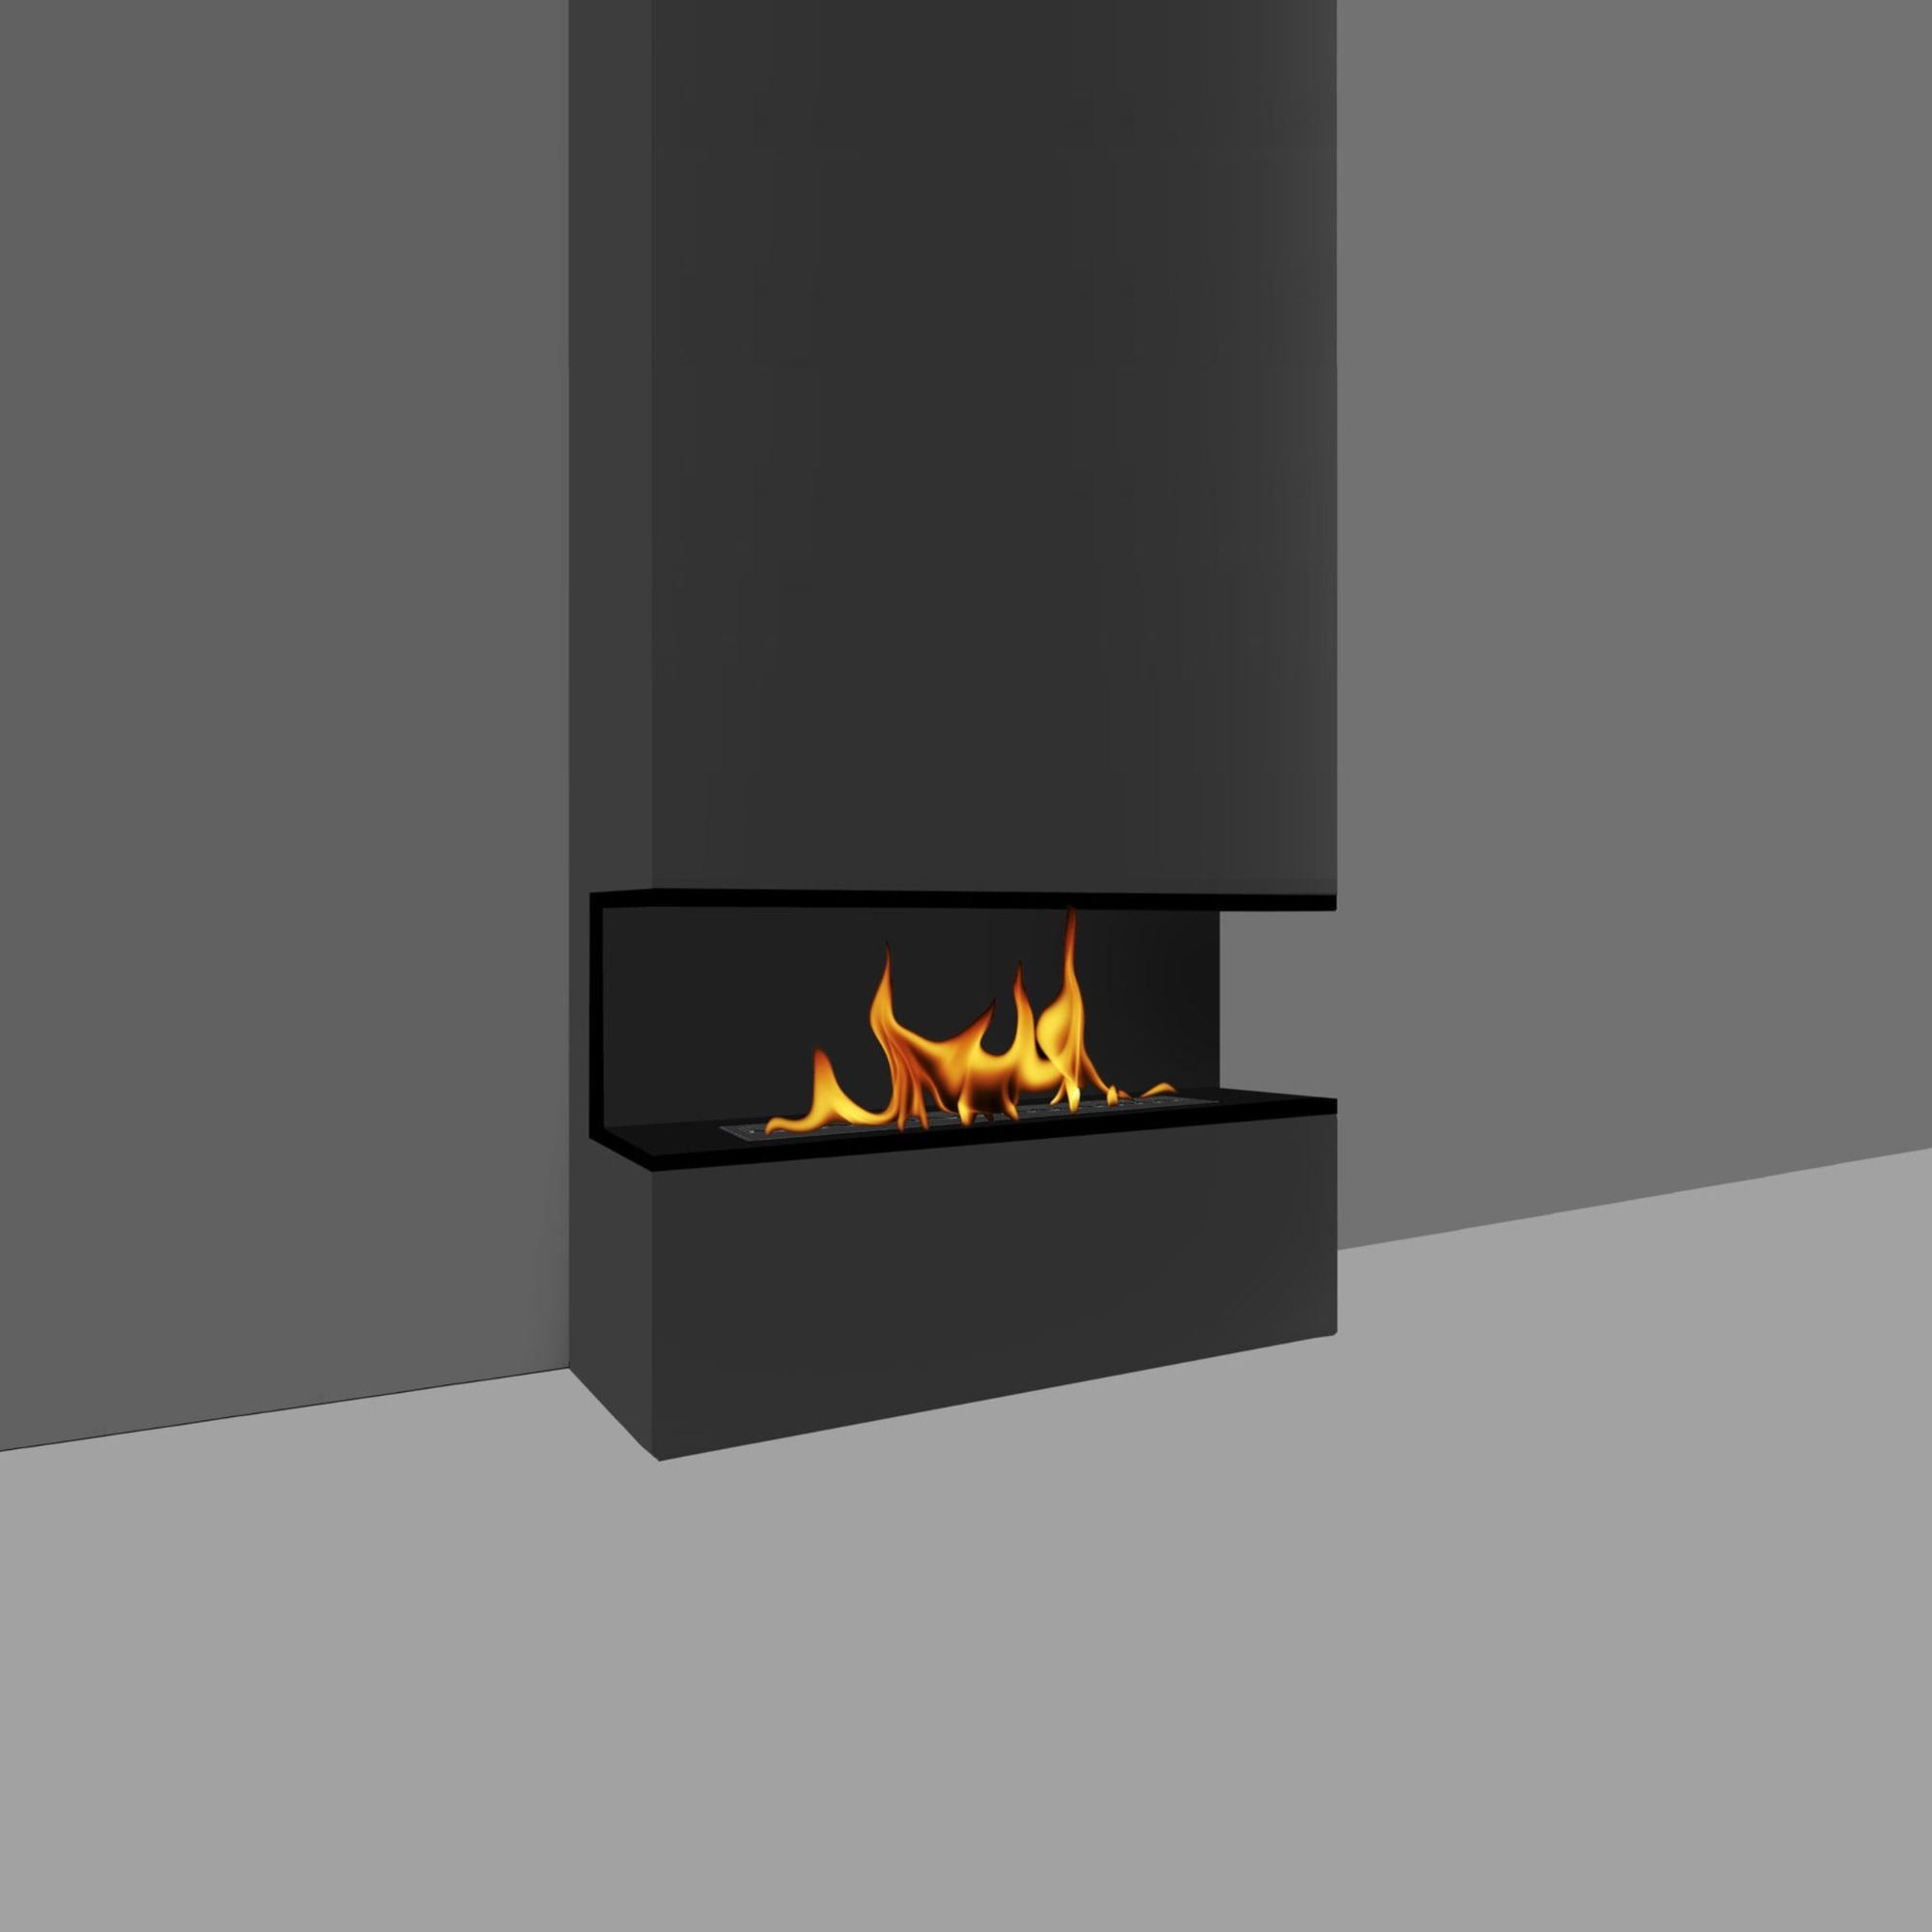 Izala Design Built-in Fireplace 90 CM